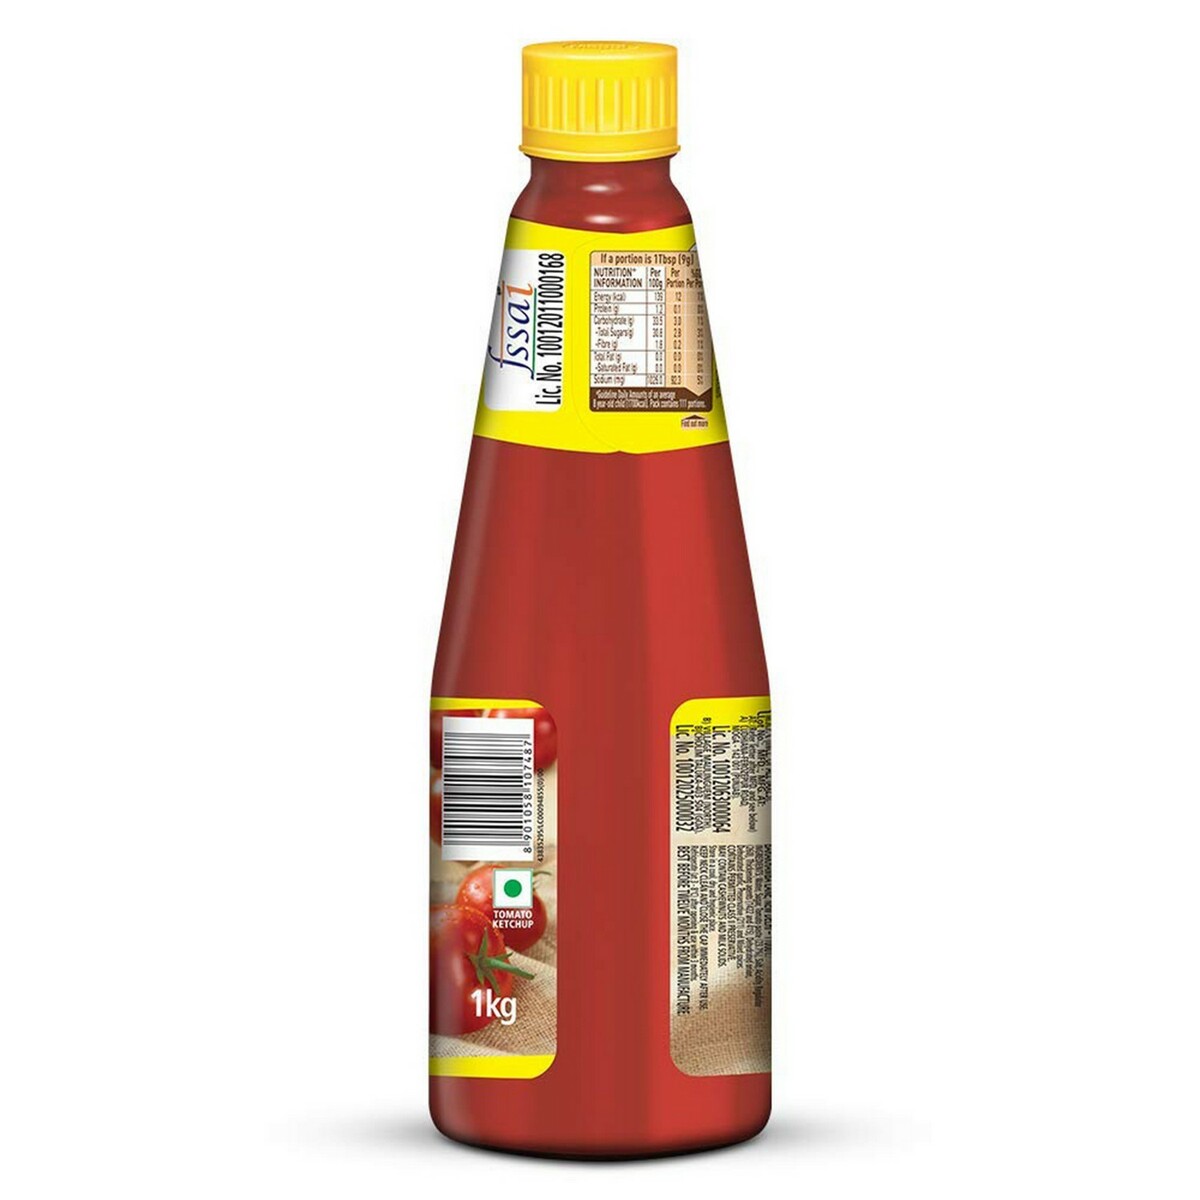 Maggi Rich Tomato Ketchup Bottle 1kg